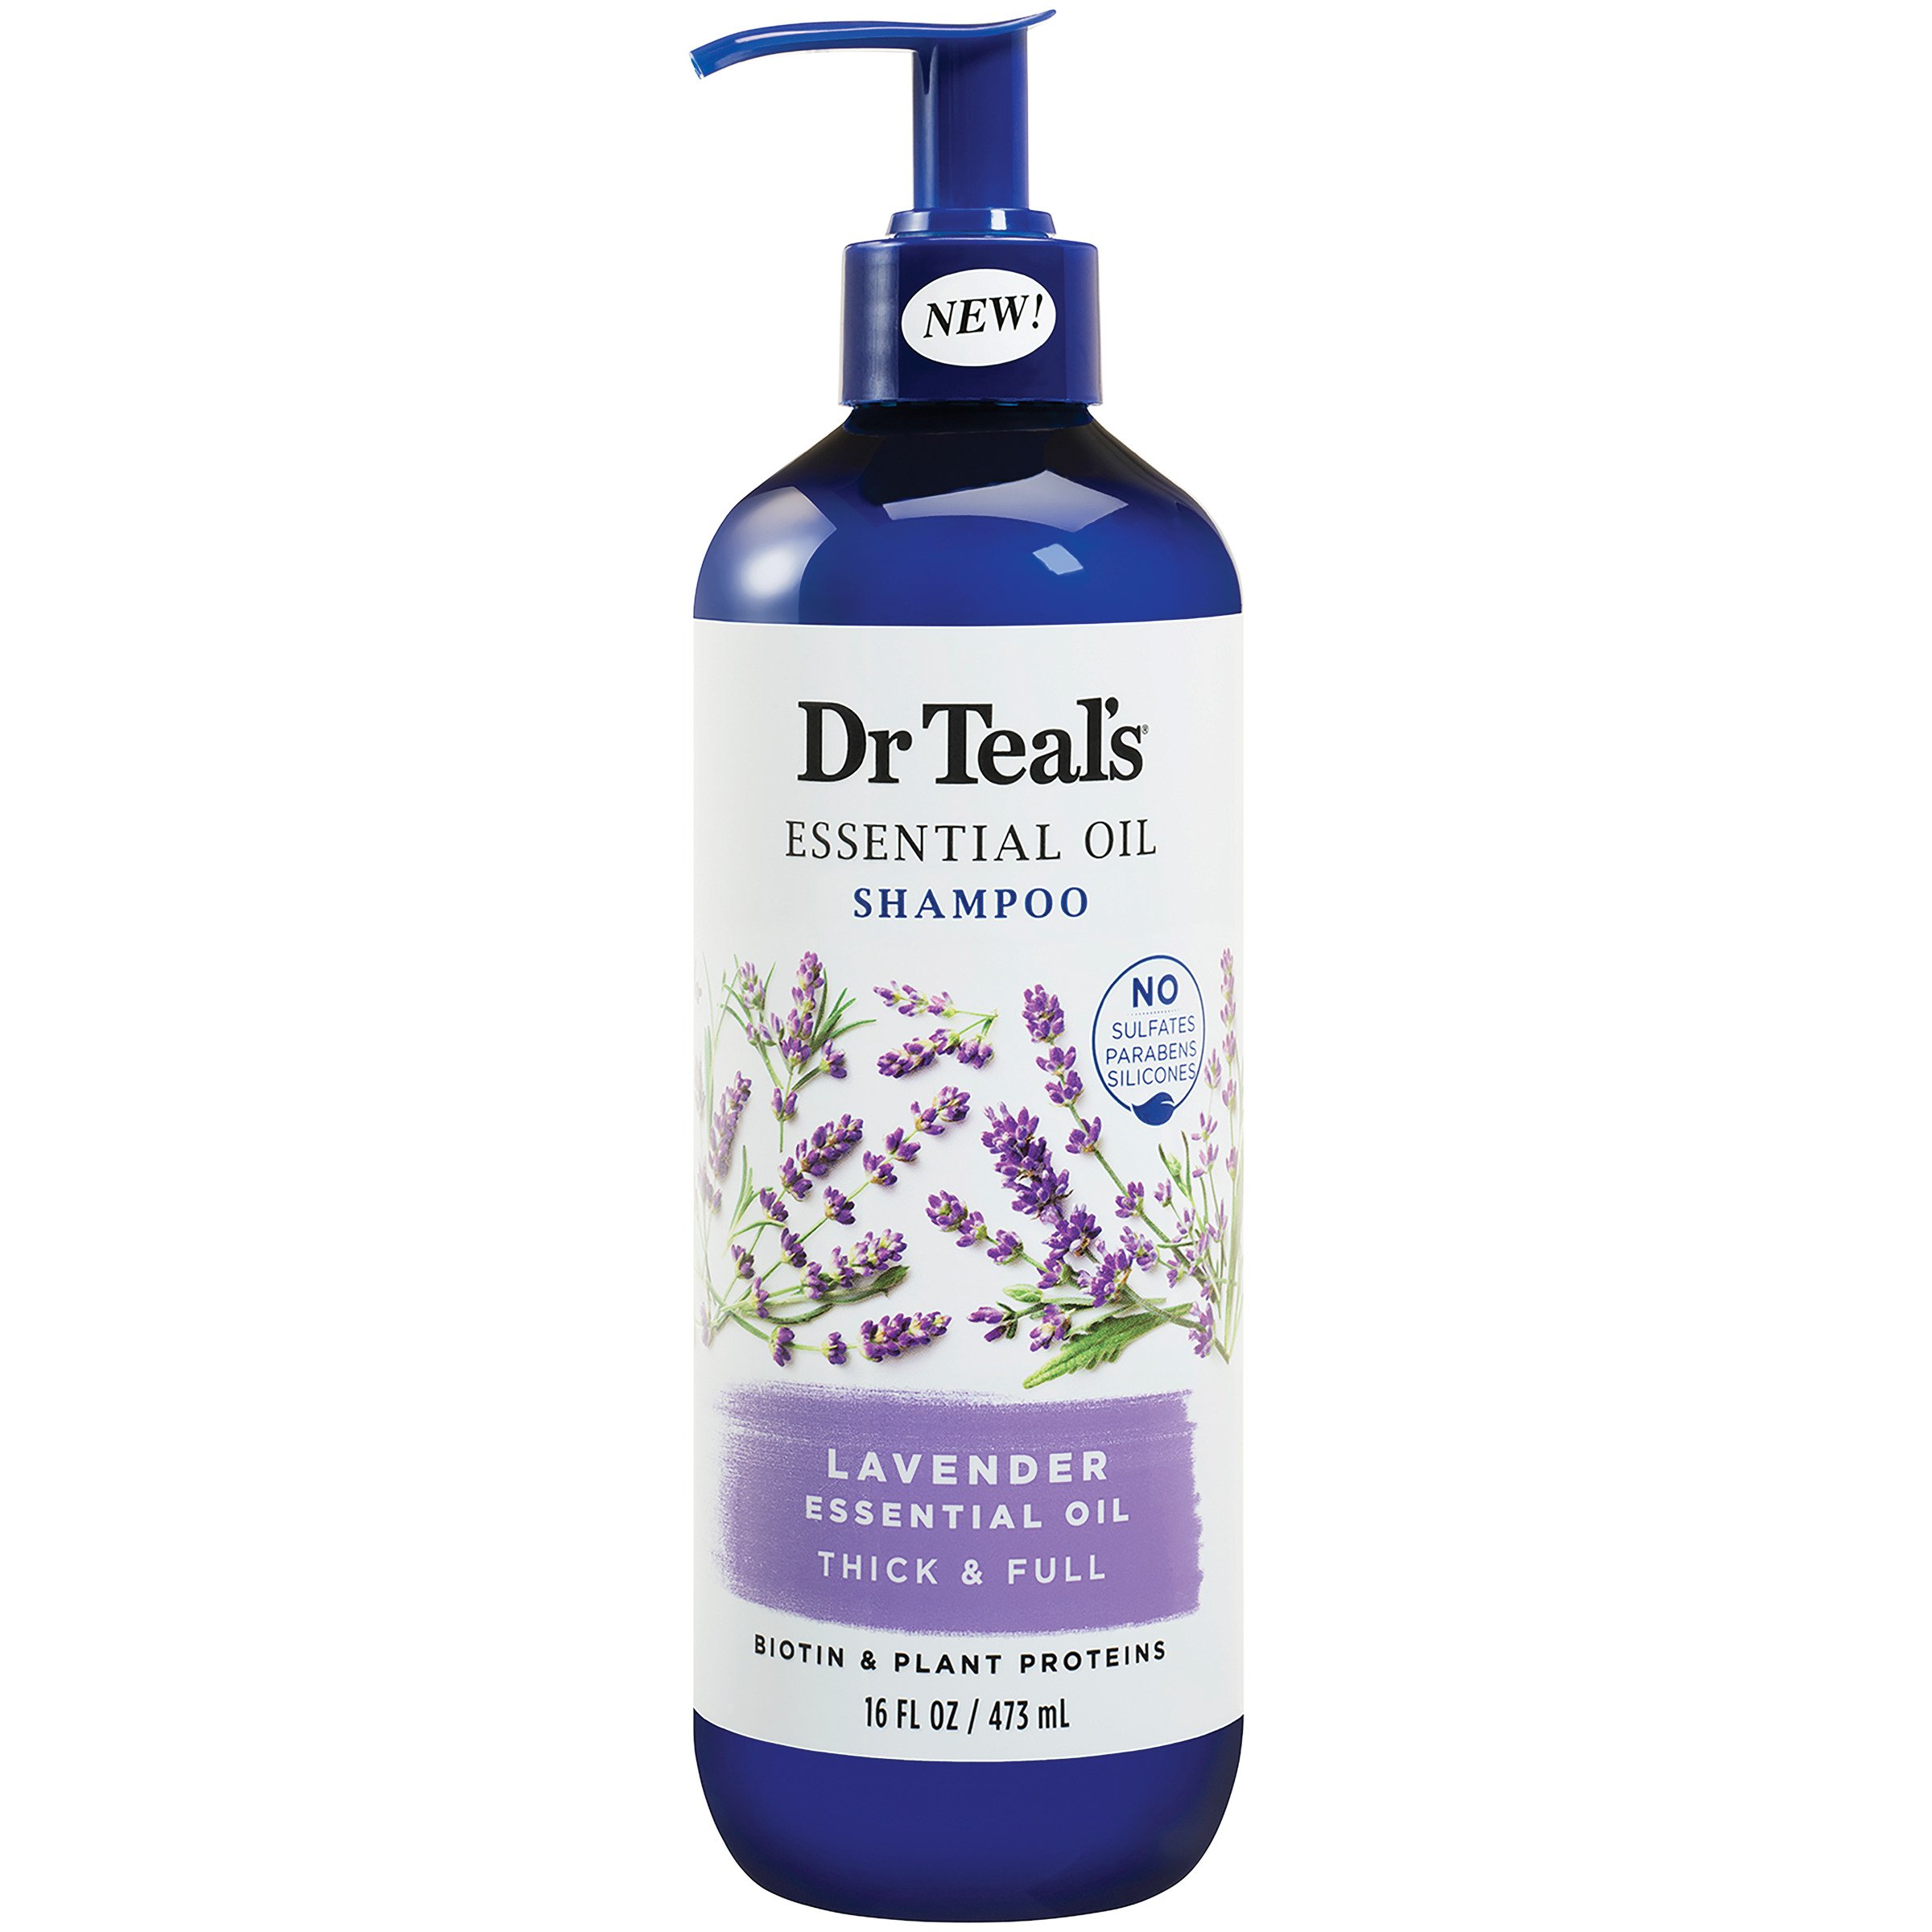 Dr Teal's Lavender Thick Full Essential Oil - Shop Shampoo & at H-E-B